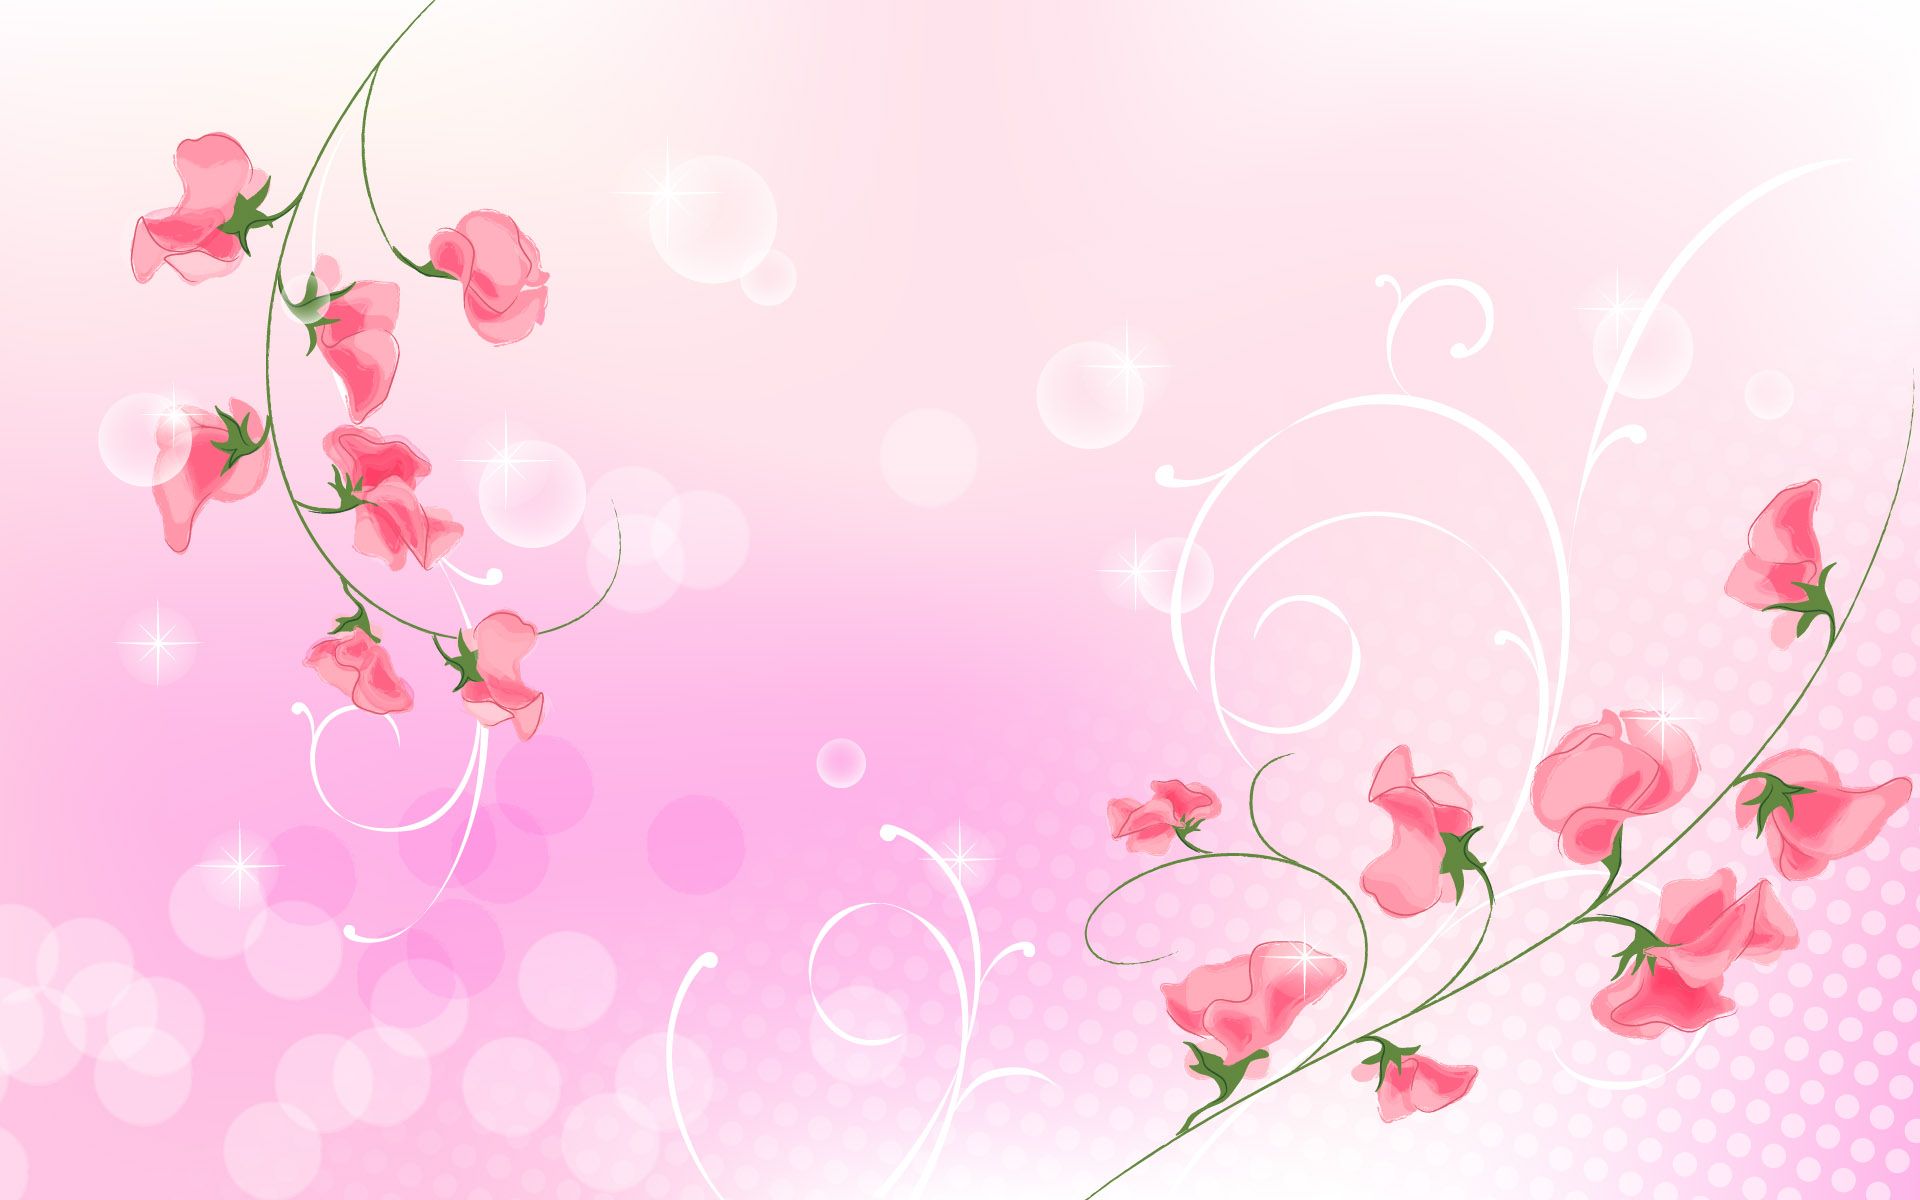 Flowery background